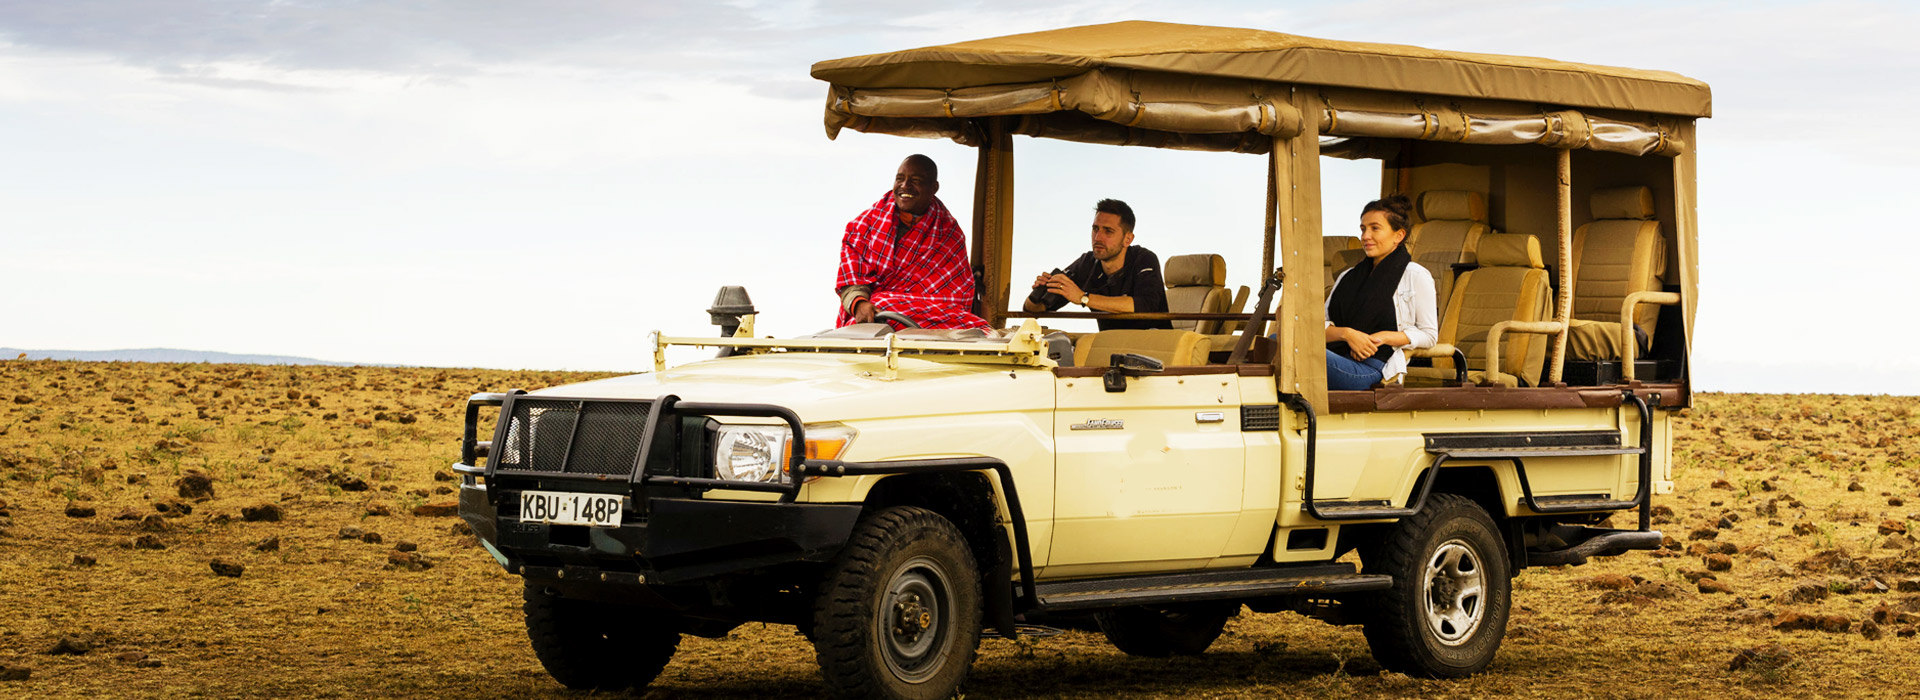 6 Days Lewa & Masai Mara Luxury Safari by flight